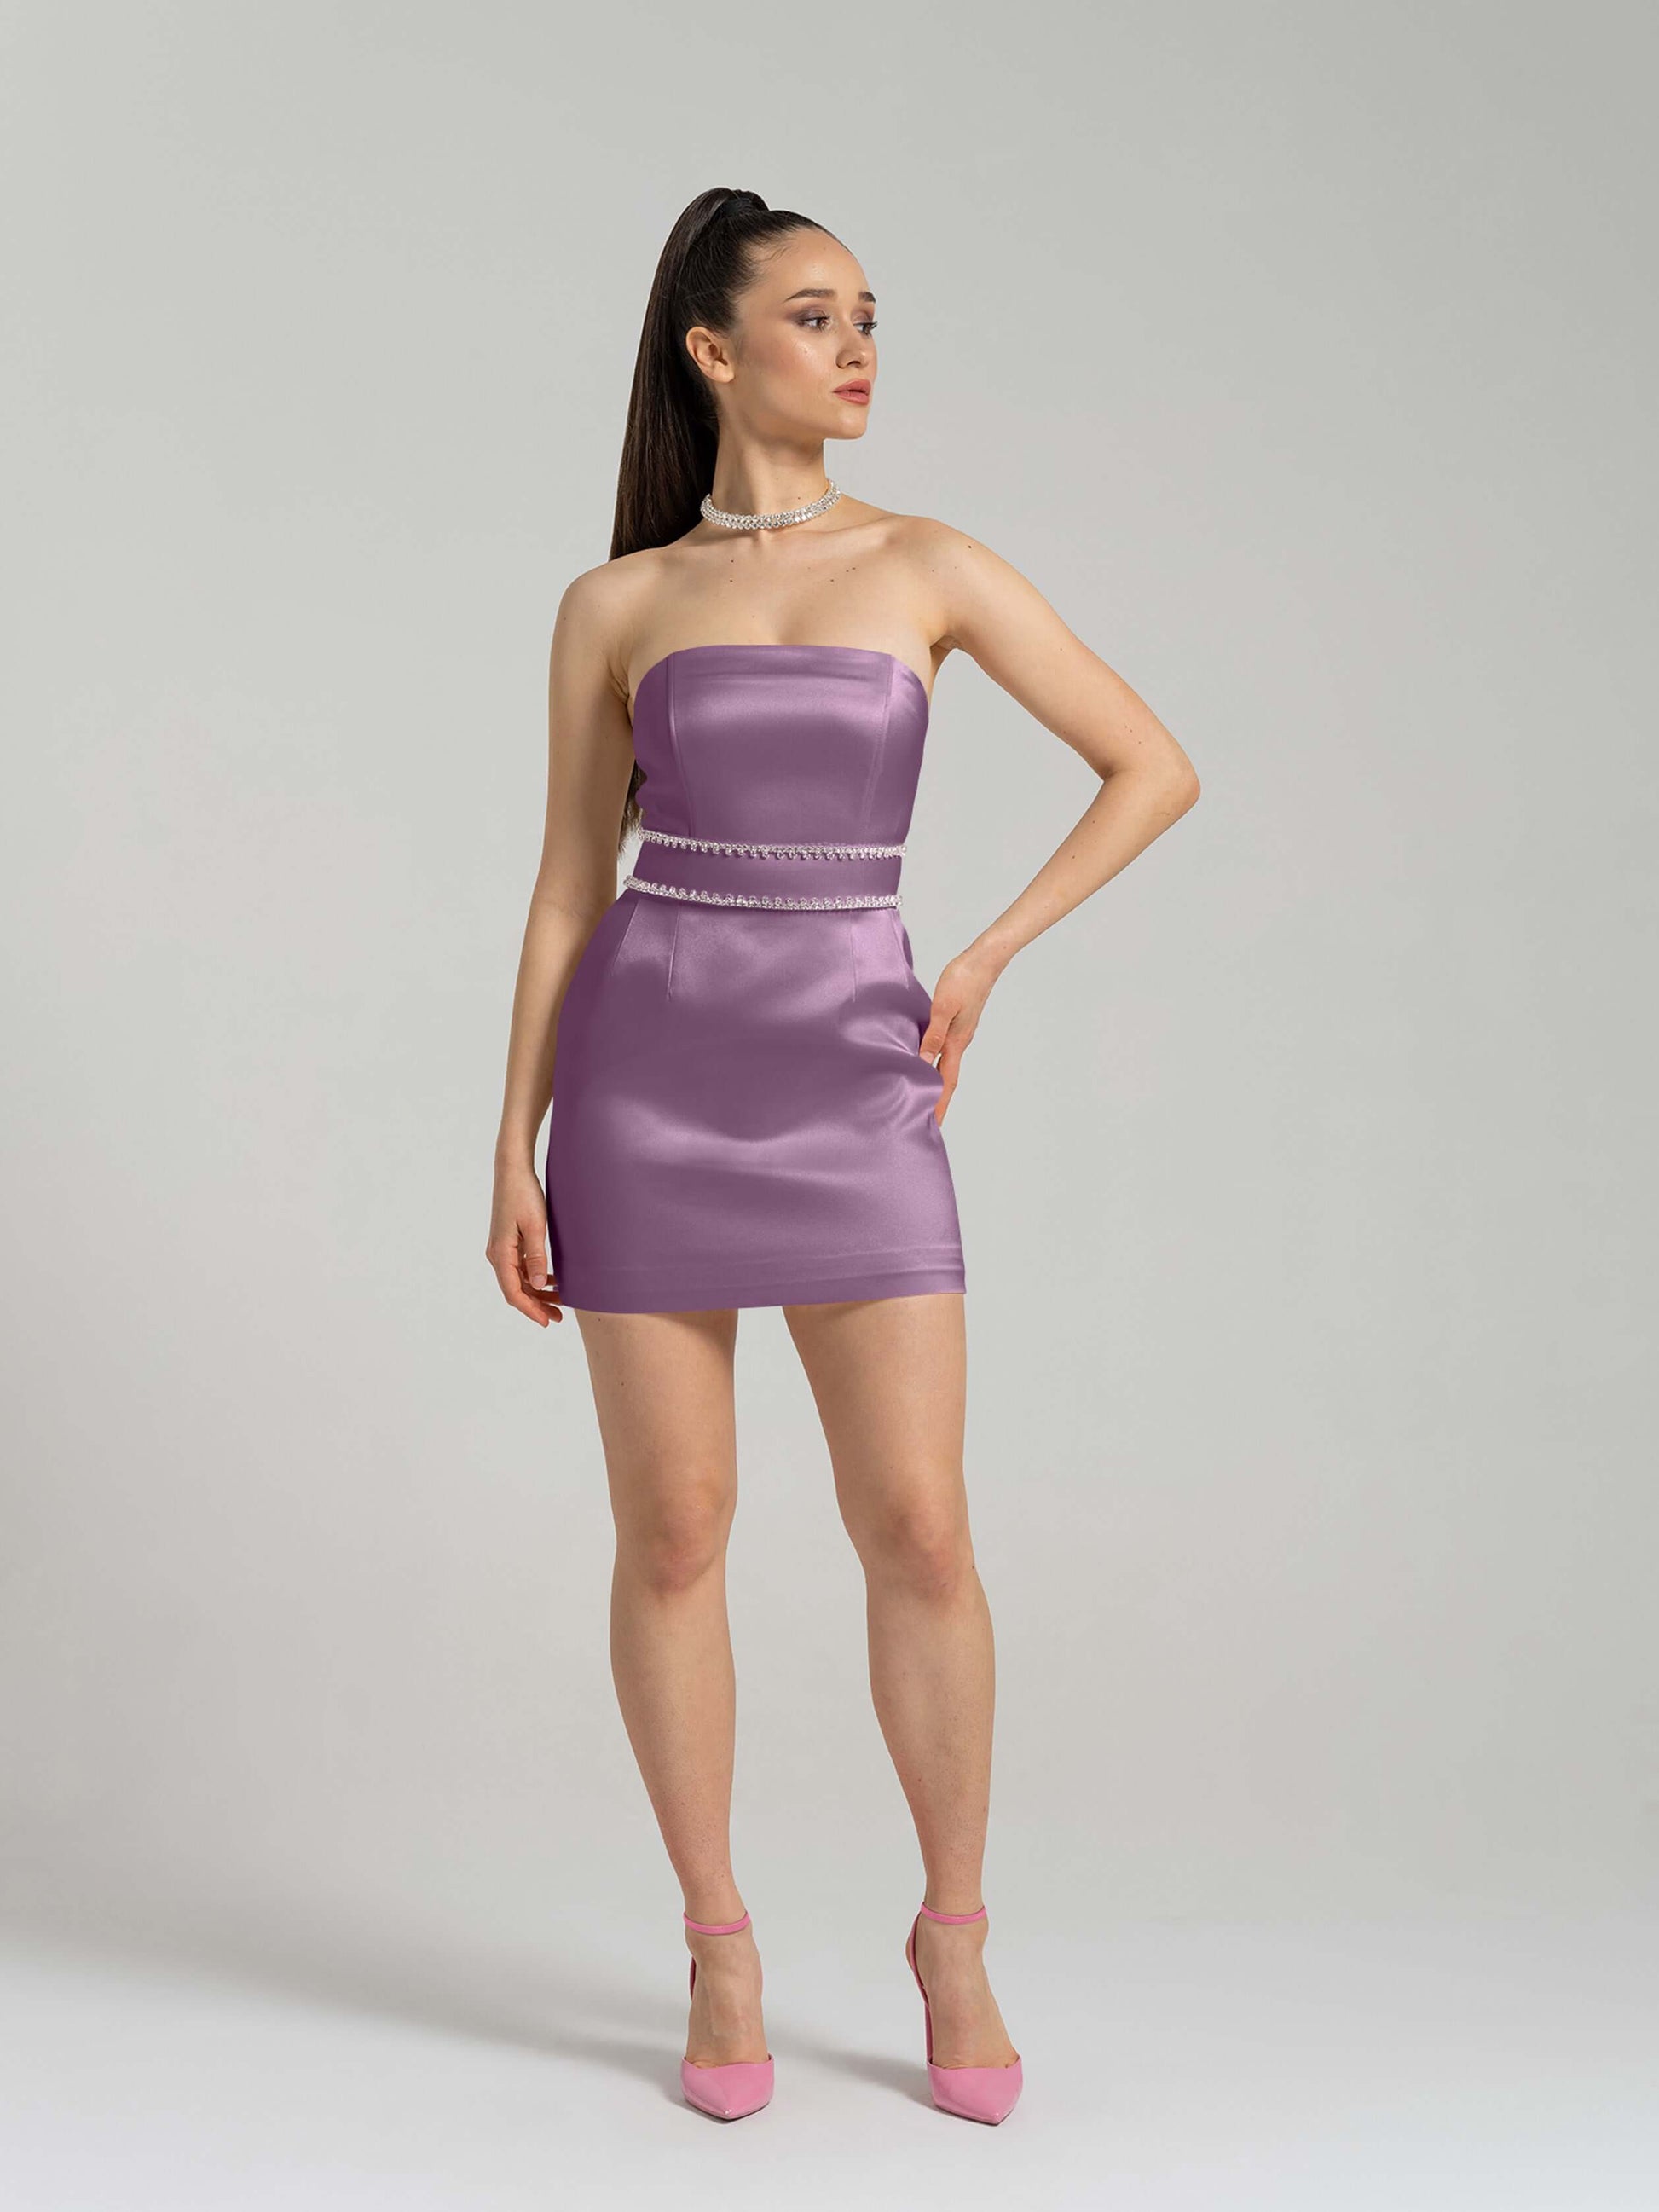 Elevated Excellence Mini Dress - Posh Purple by Tia Dorraine Women's Luxury Fashion Designer Clothing Brand